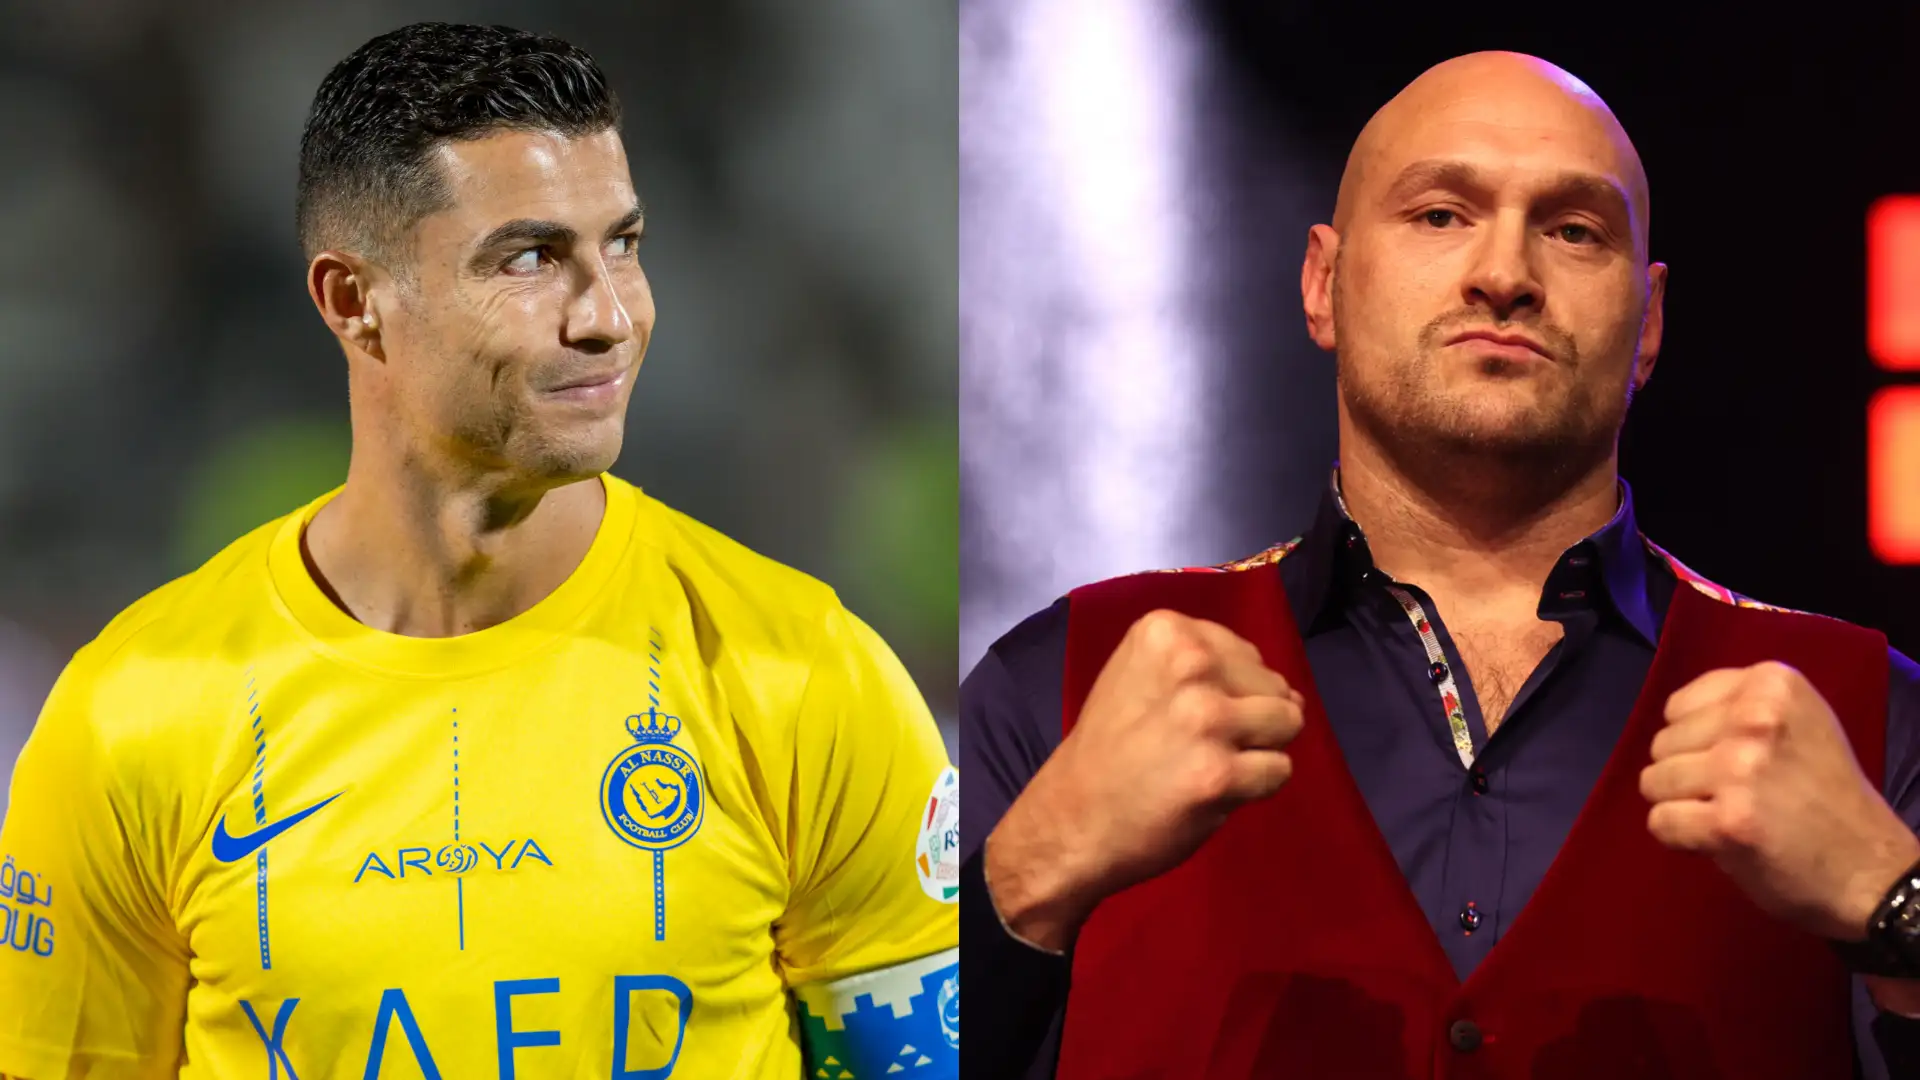 Revealed: Tyson Fury set to rival Cristiano Ronaldo's insane Al-Nassr salary as Gypsy King prepares for Oleksandr Usyk fight in Saudi Arabia